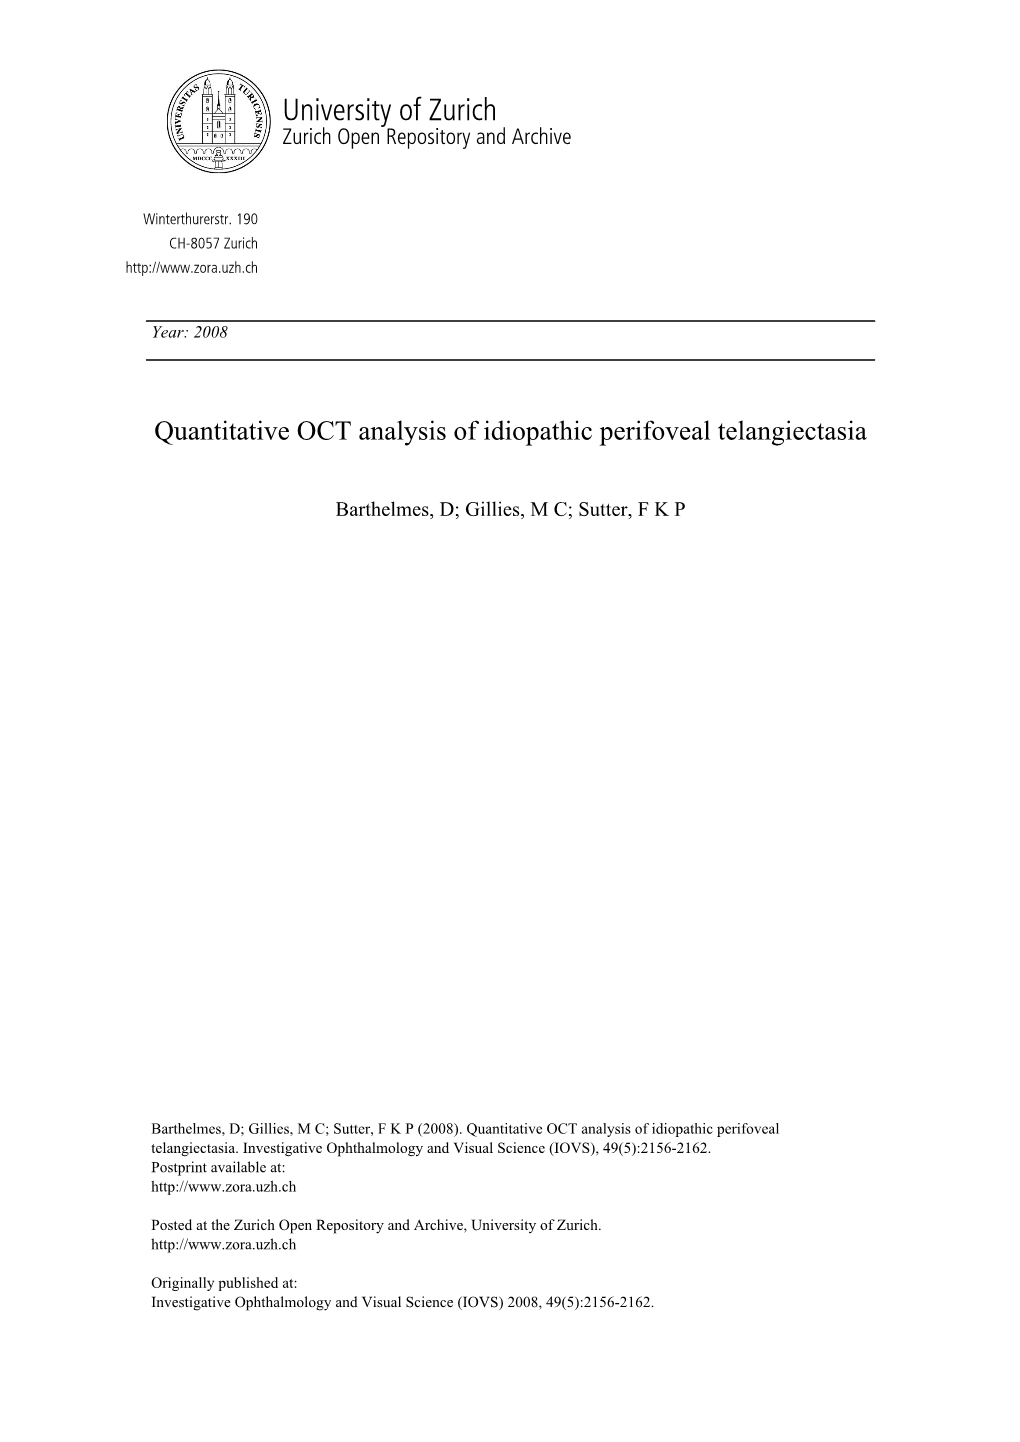 'Quantitative OCT Analysis of Idiopathic Perifoveal Telangiectasia'